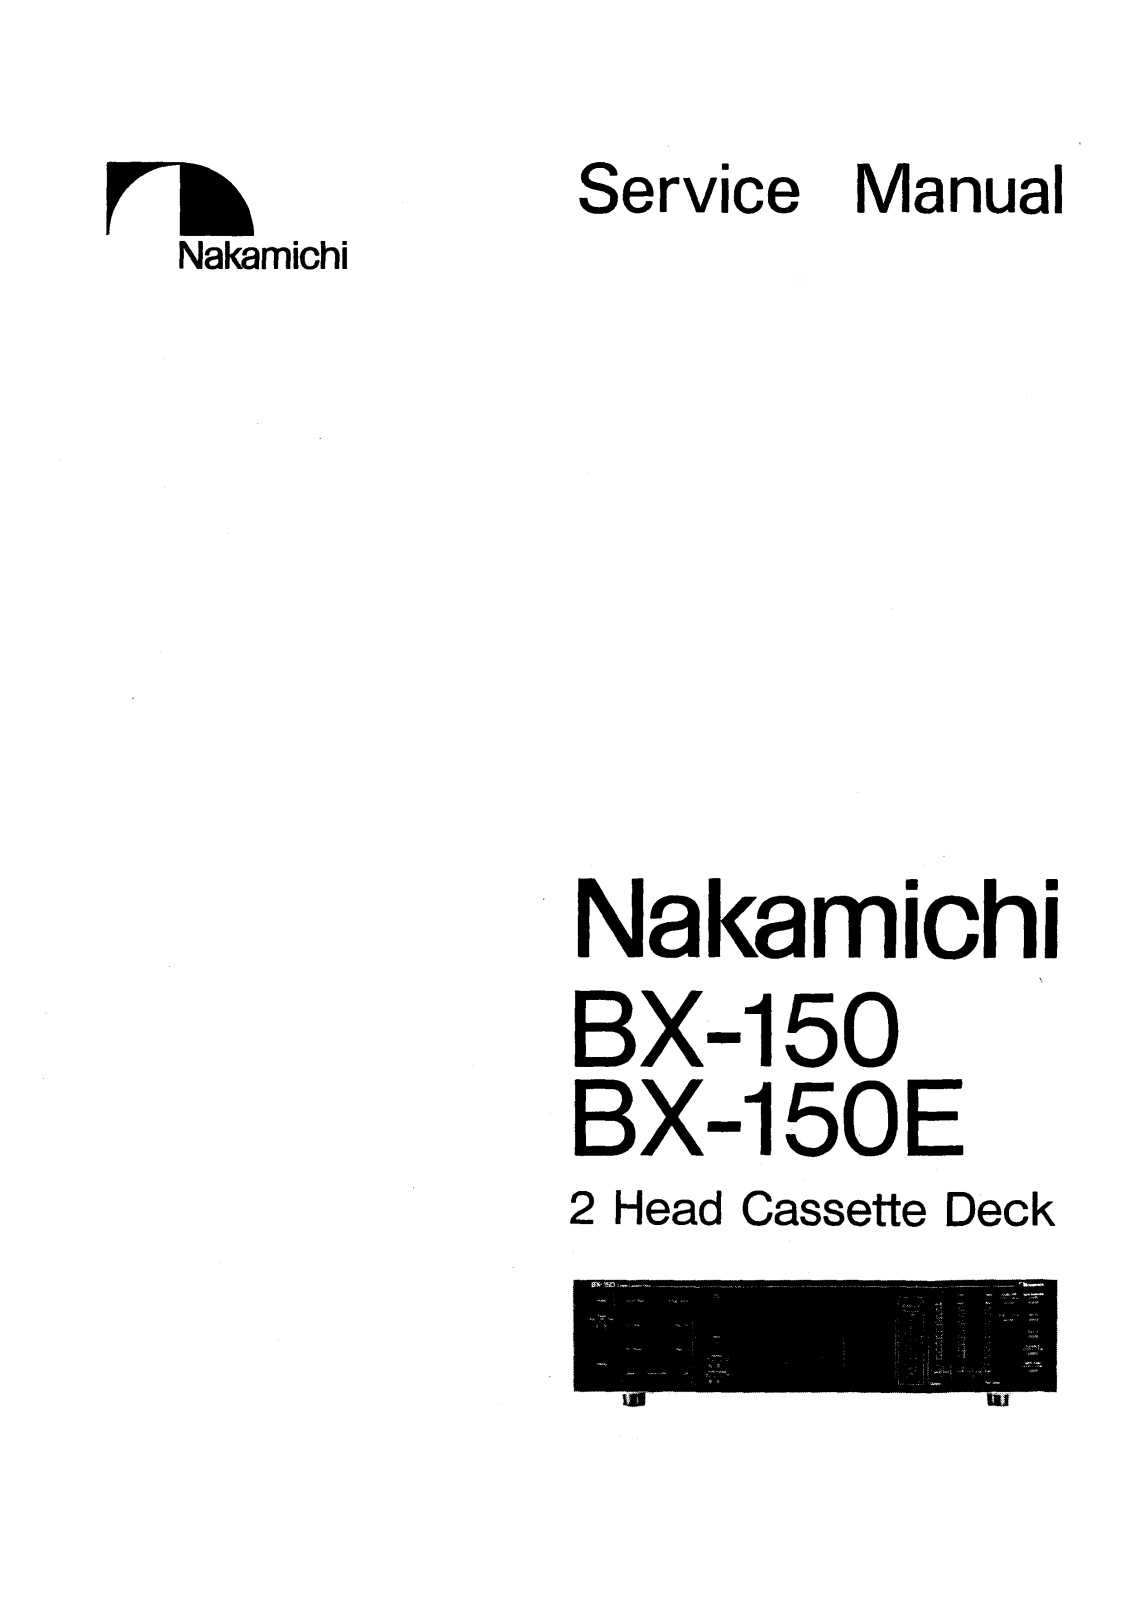 Nakamichi BX-150, BX-150E Service Manual